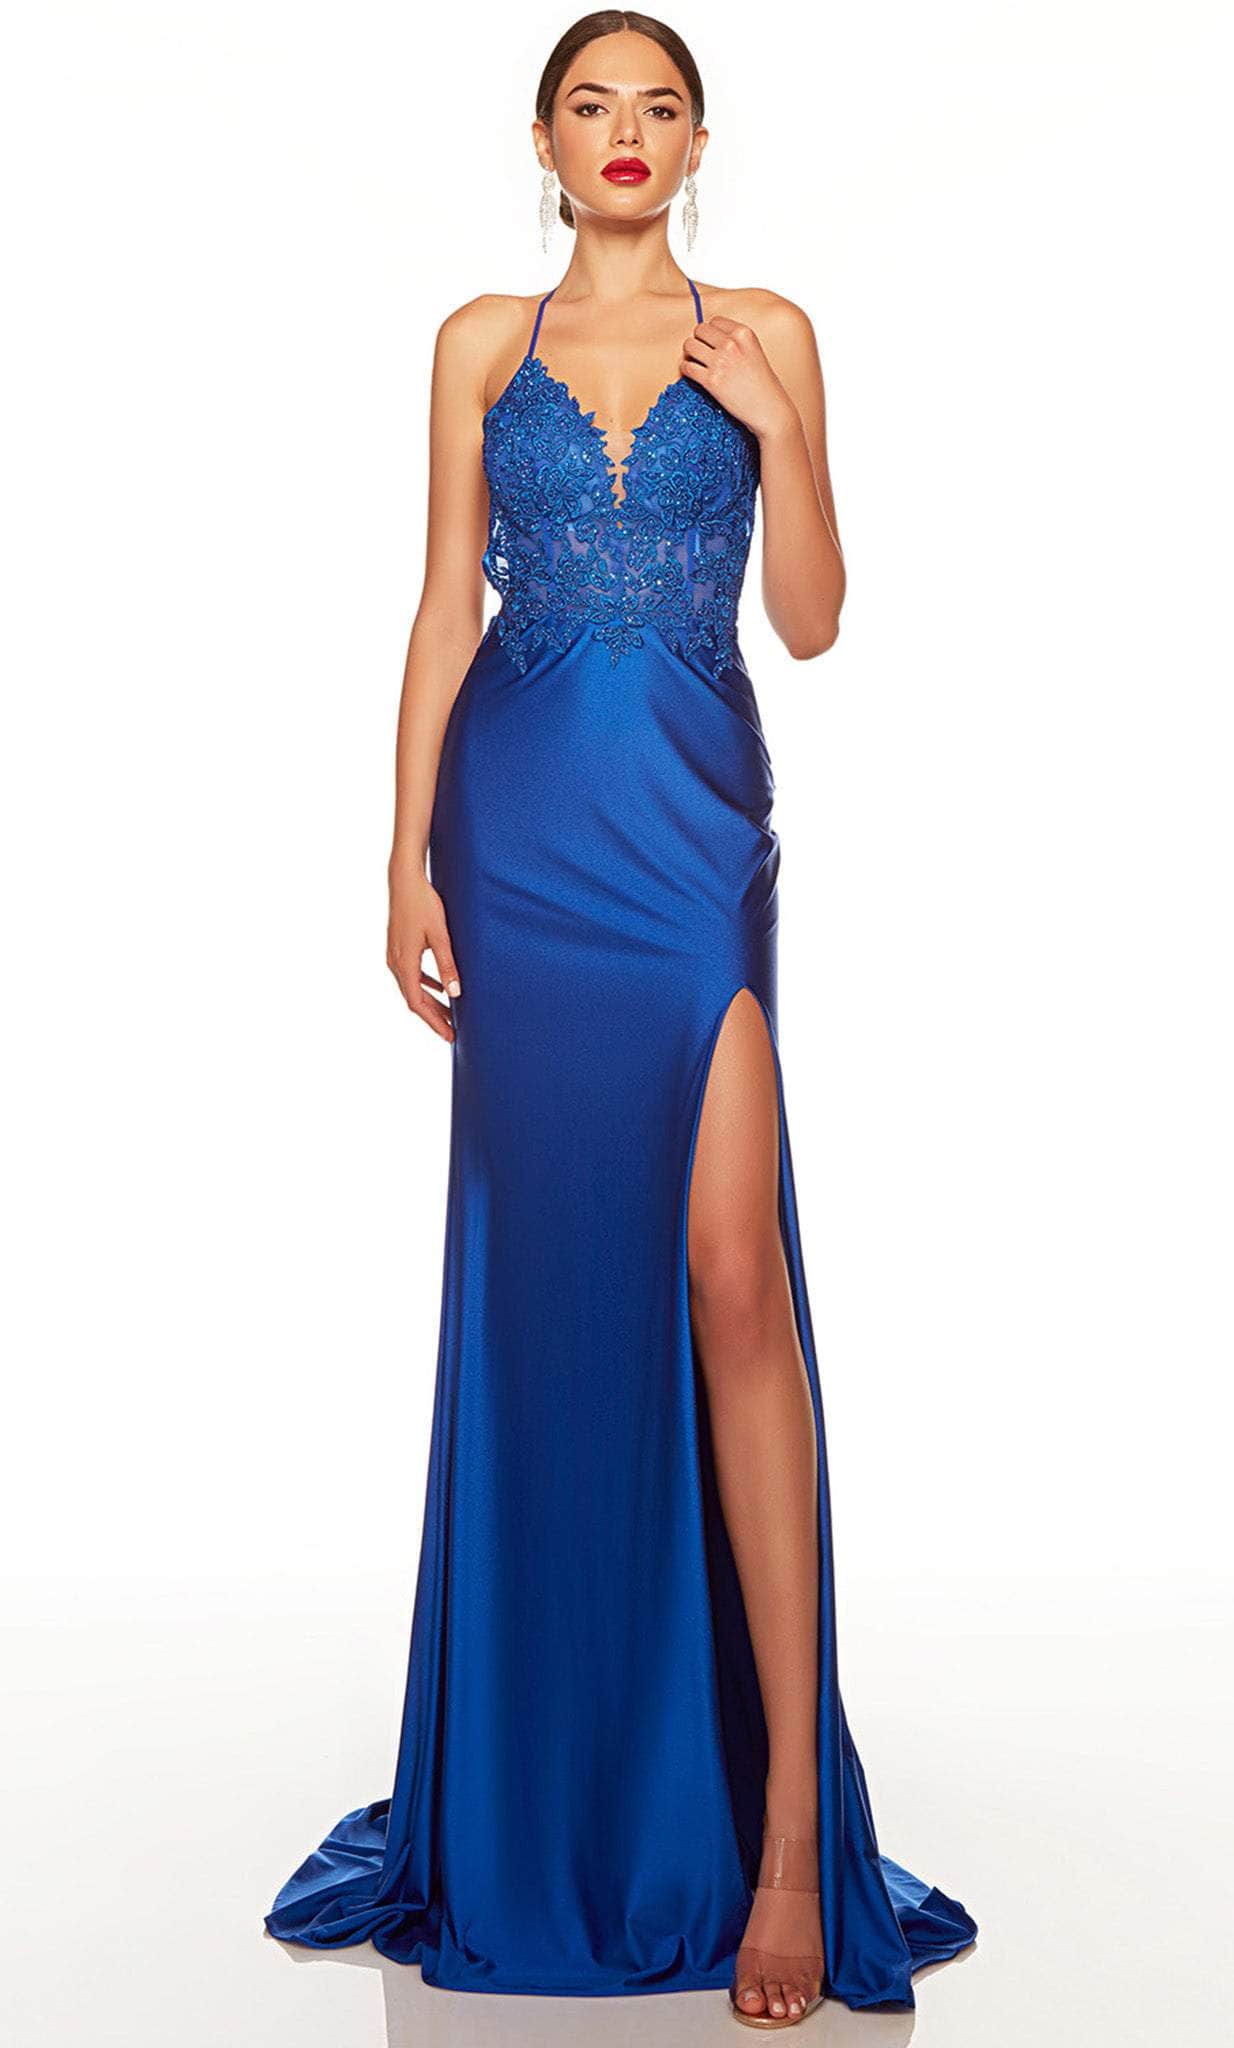 Alyce Paris 61452 - Plunging Neckline Dress Special Occasion Dress 000 / Royal